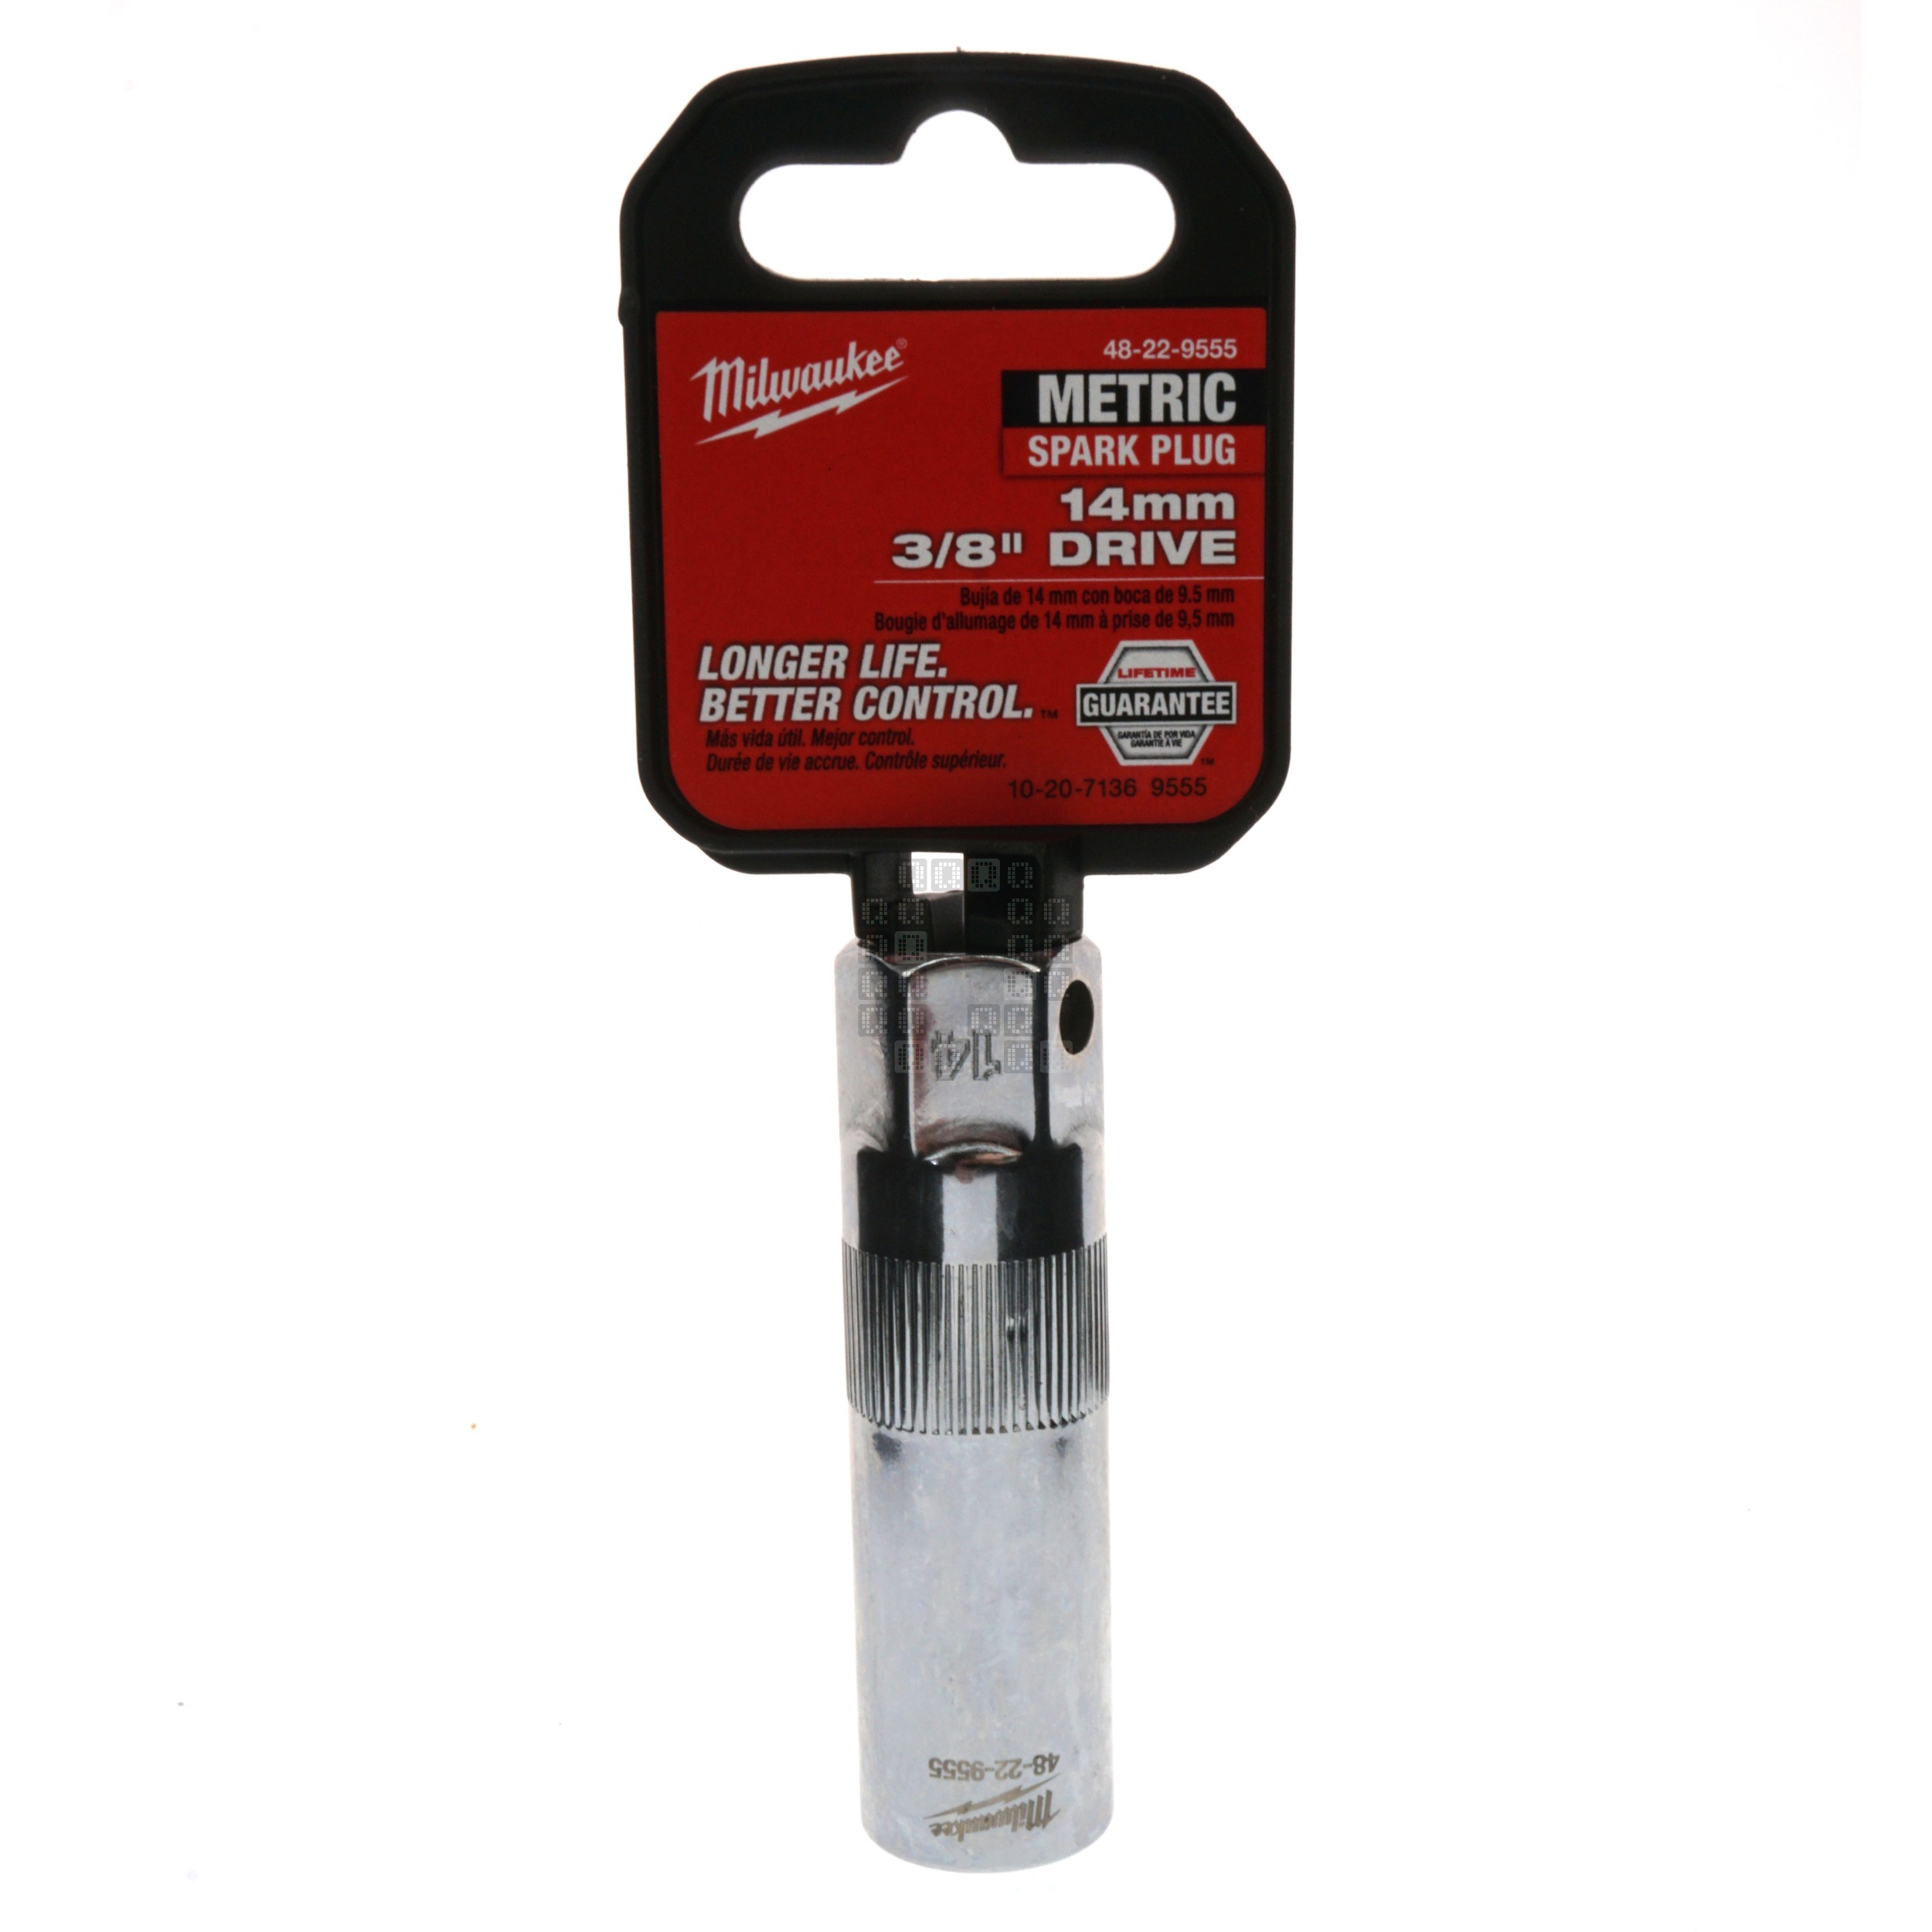 Milwaukee Tool 48-22-9555 3/8" Drive 14mm Metric Spark Plug Chrome Socket, Rubber Retainer